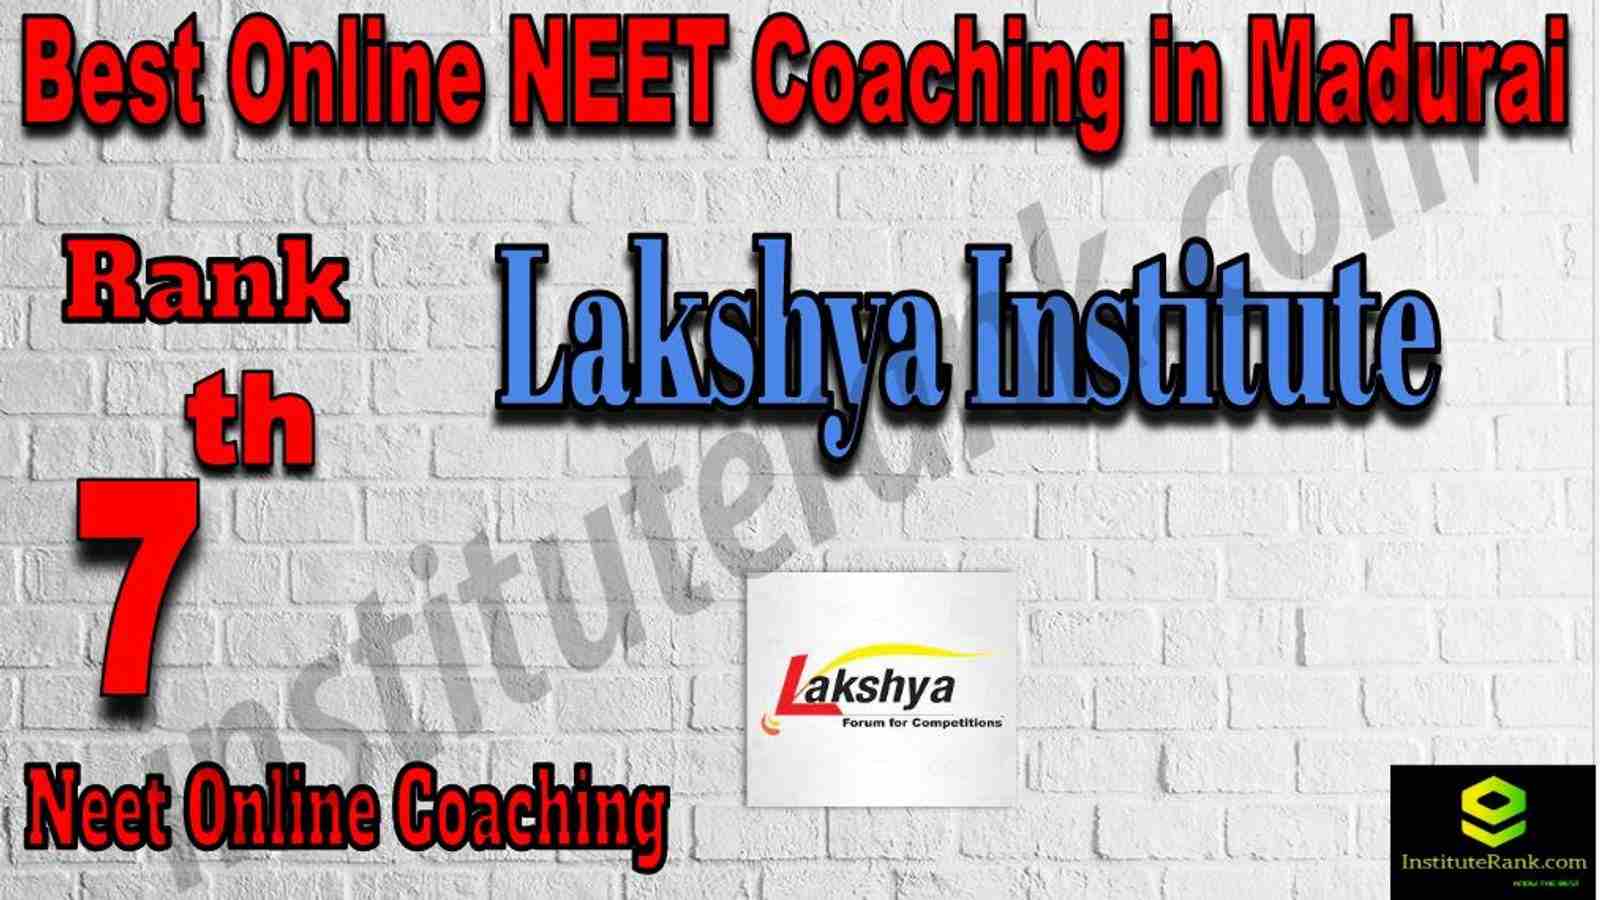 7th Best Online Neet Coaching in Madurai